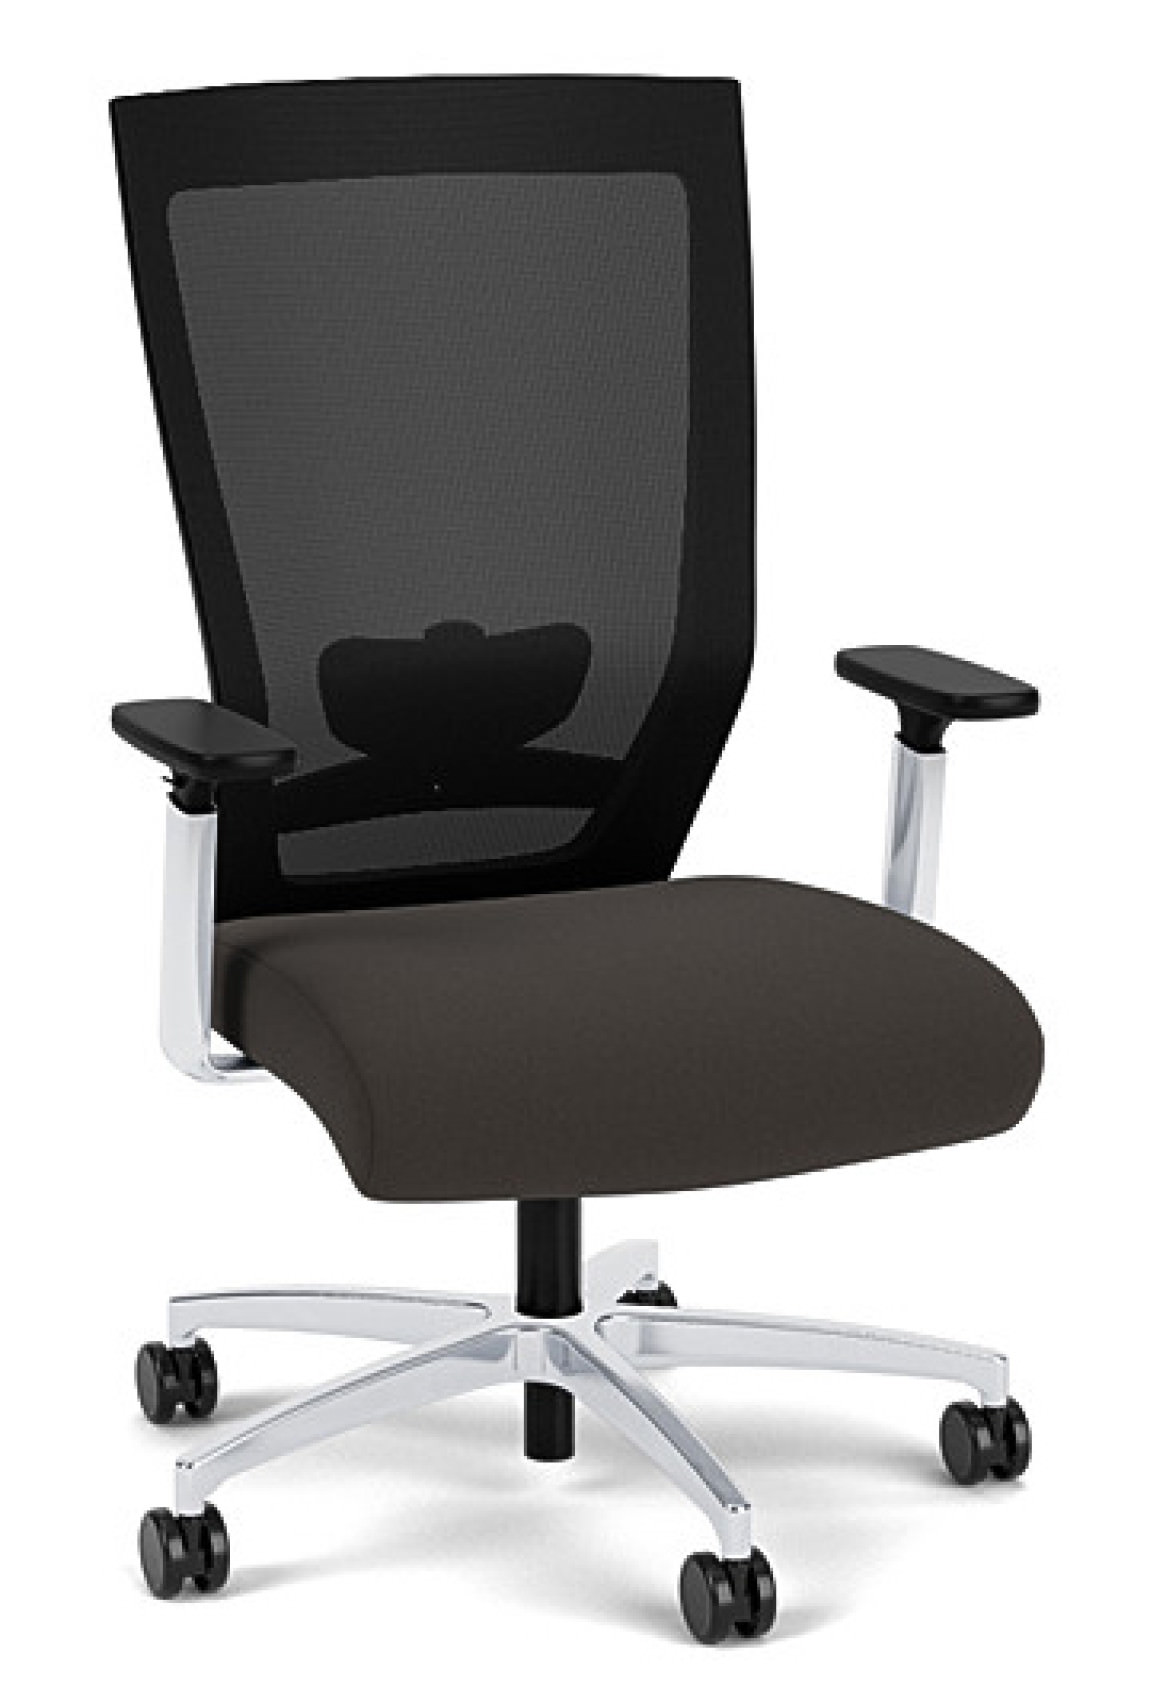 https://madisonliquidators.com/images/p/1150/13374-mesh-back-office-chair-with-lumbar-support-2.jpg